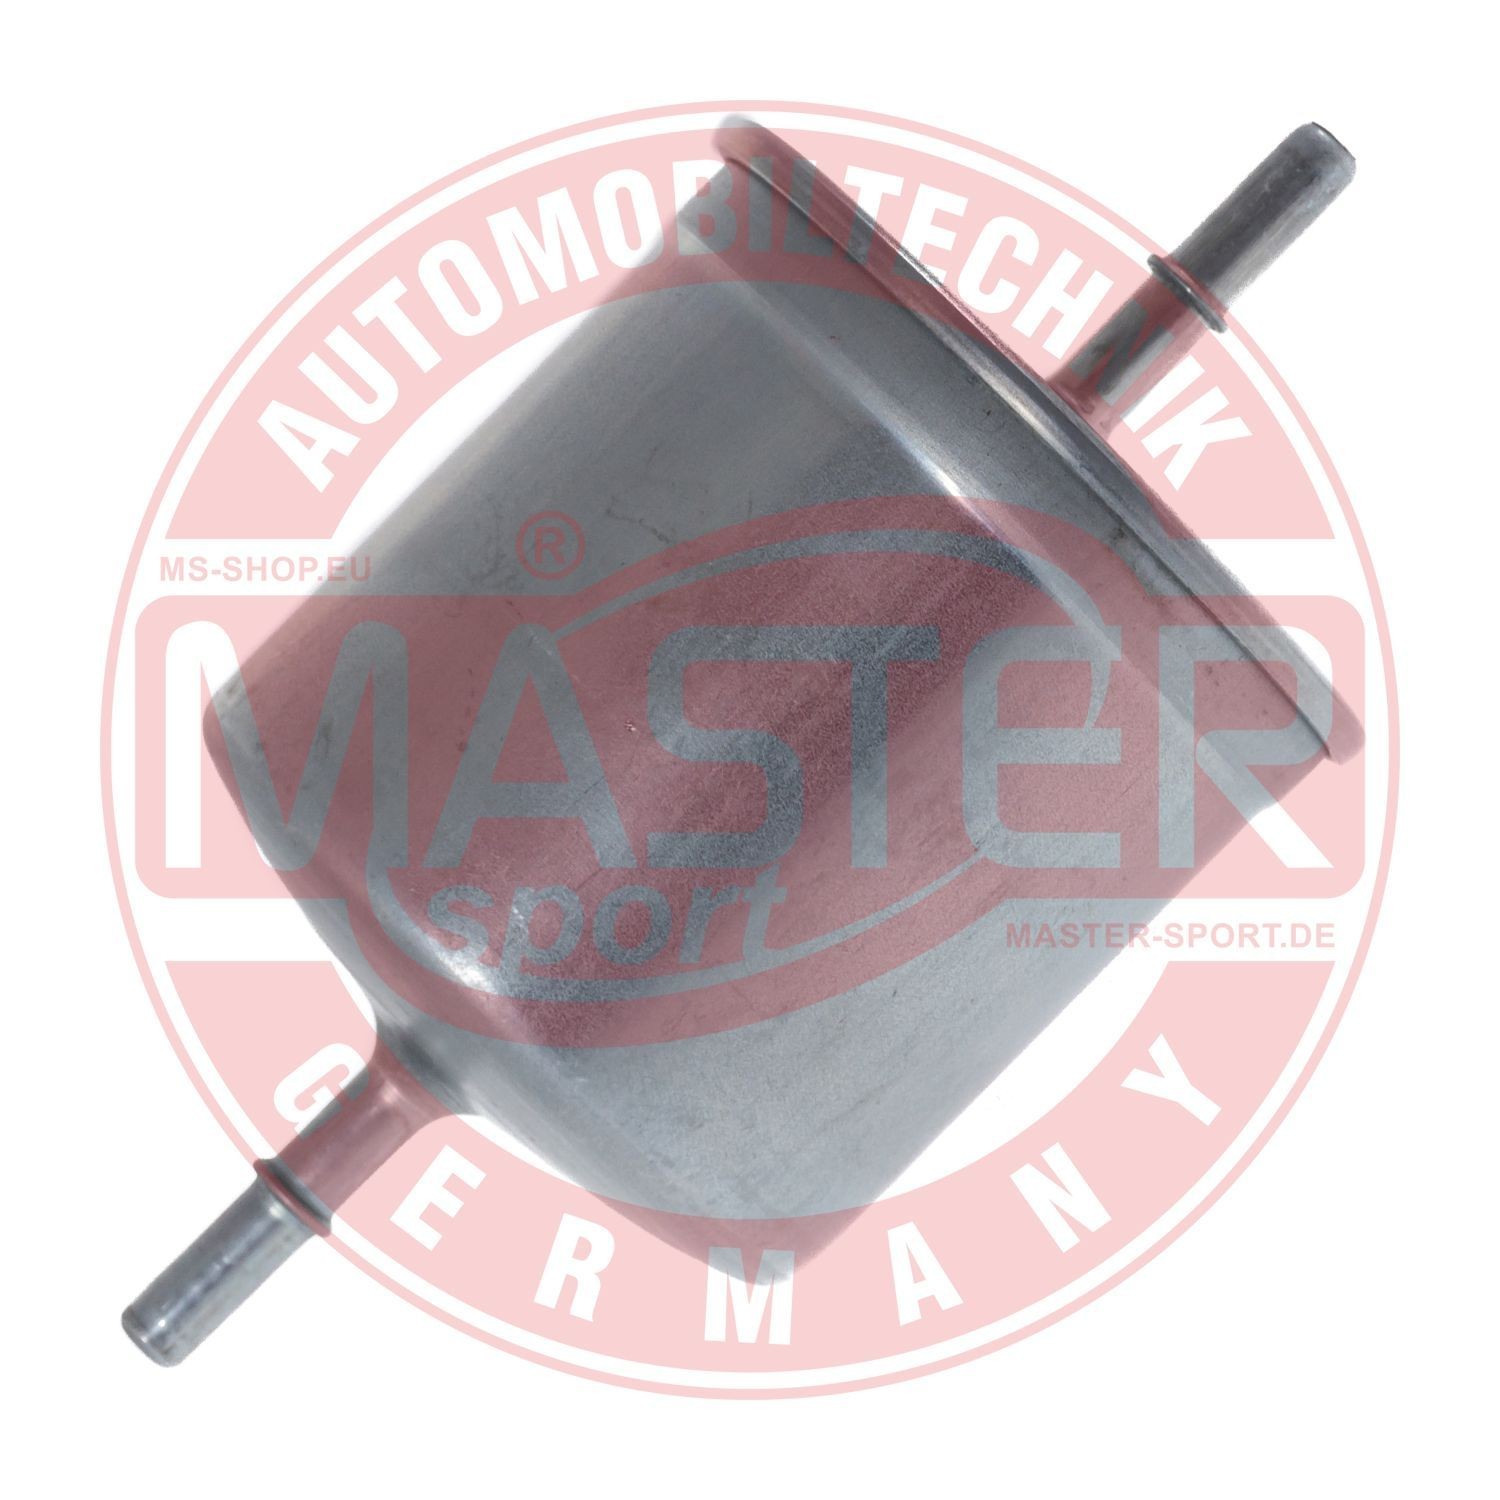 MASTER-SPORT 822/2-KF-PCS-MS Fuel filter In-Line Filter, 8mm, 8mm